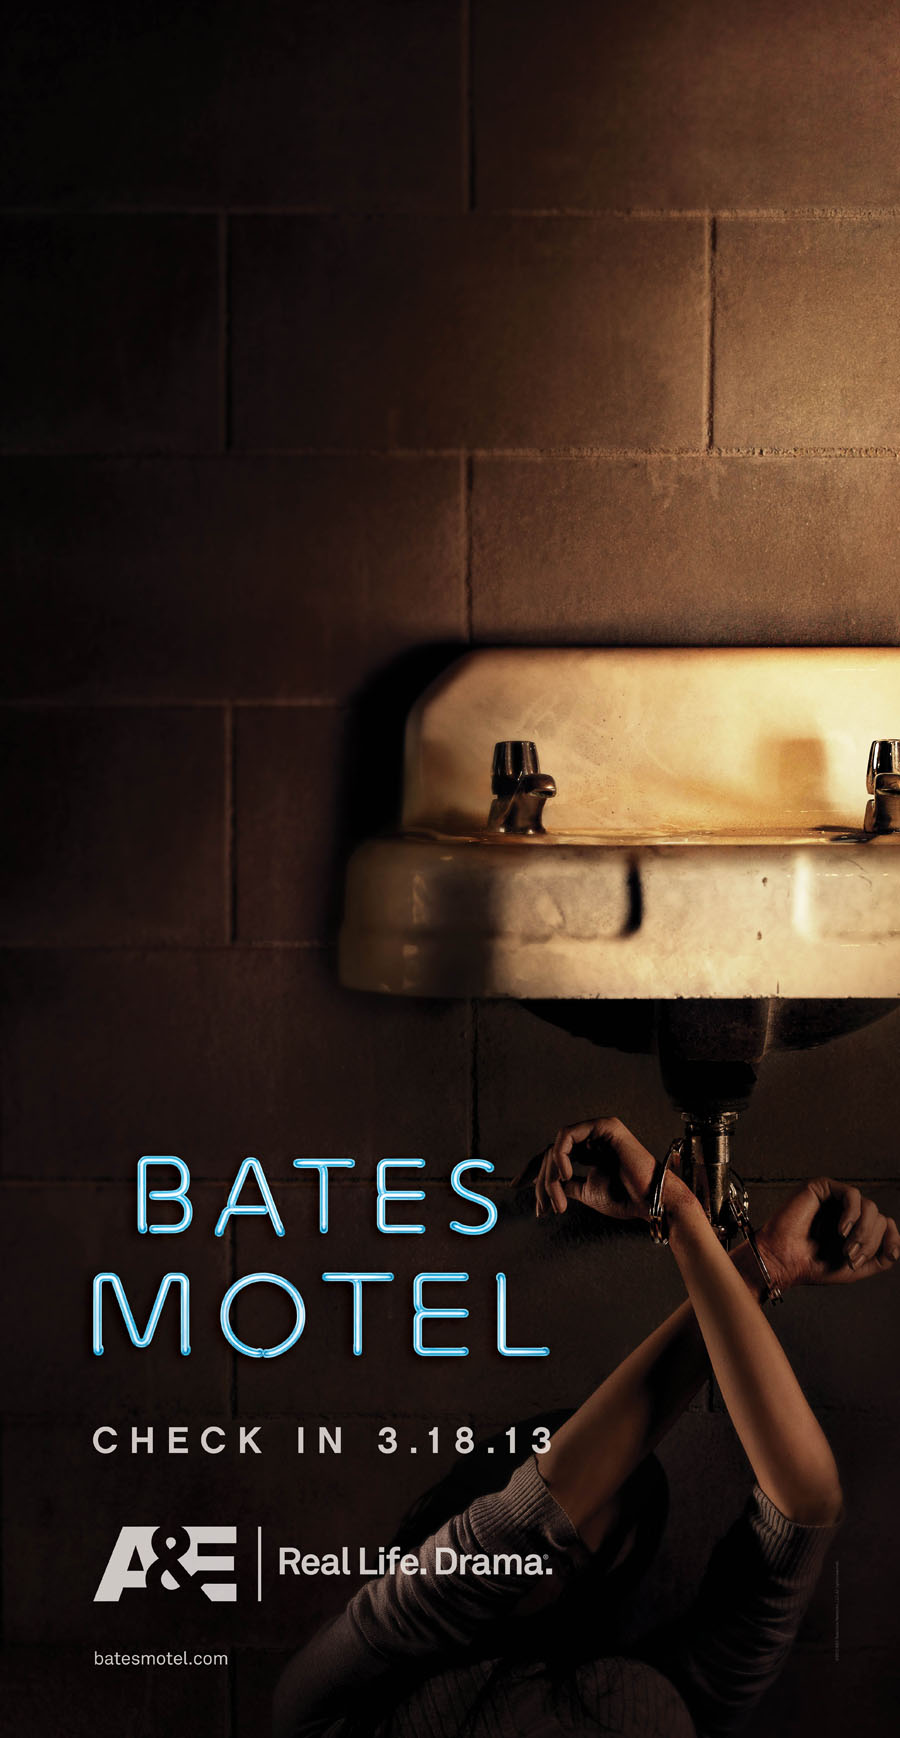 bates-motel-poster-sink.jpg